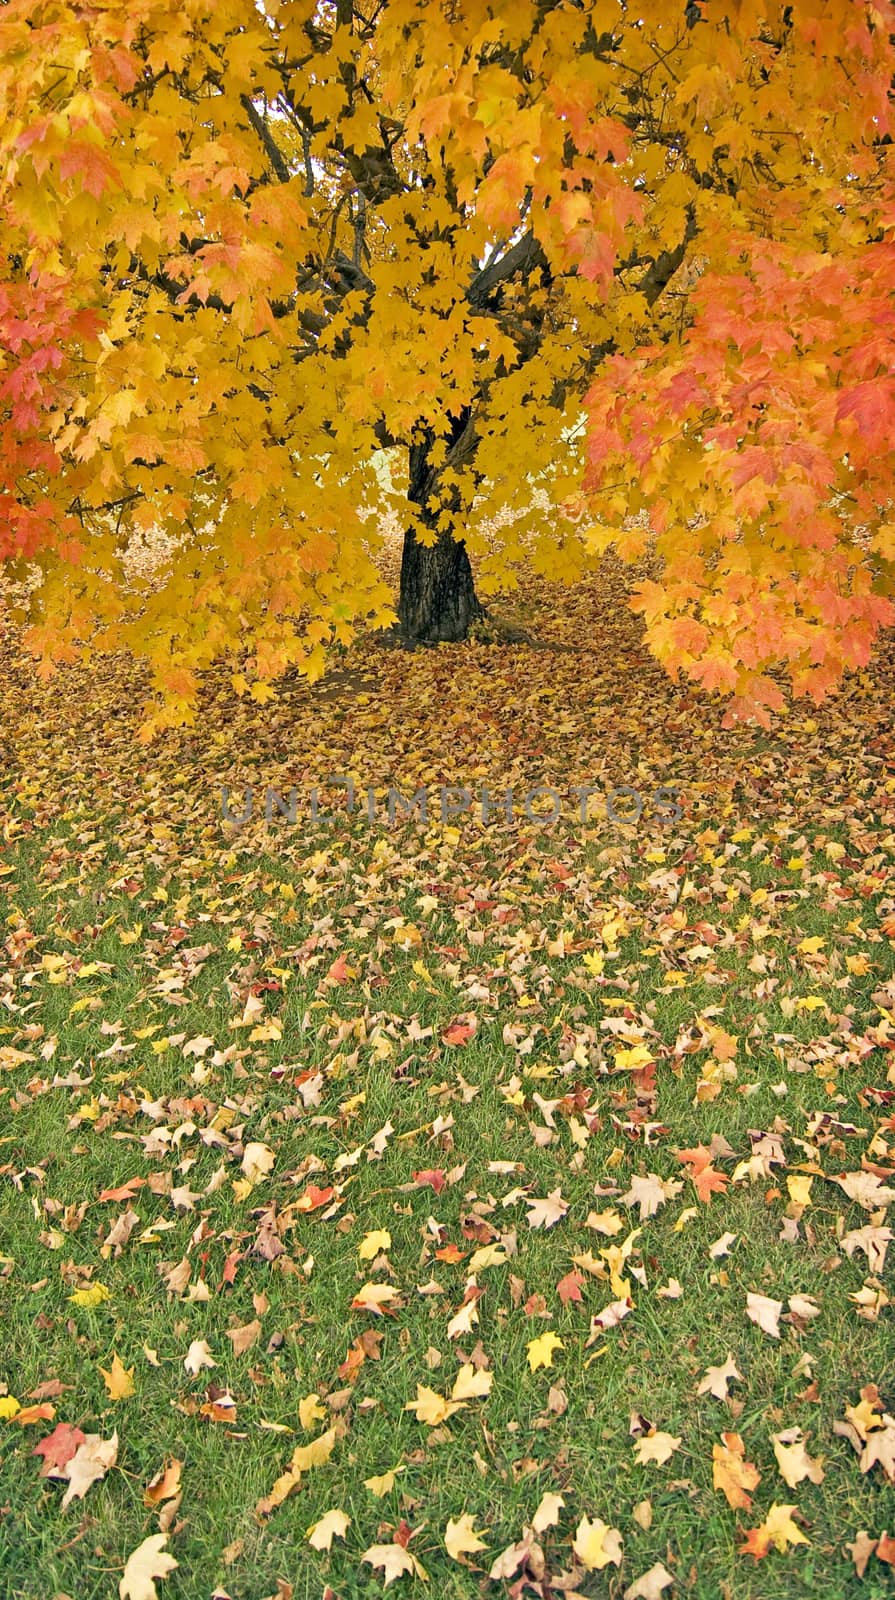 Autumn Tree In Rain by stockbuster1